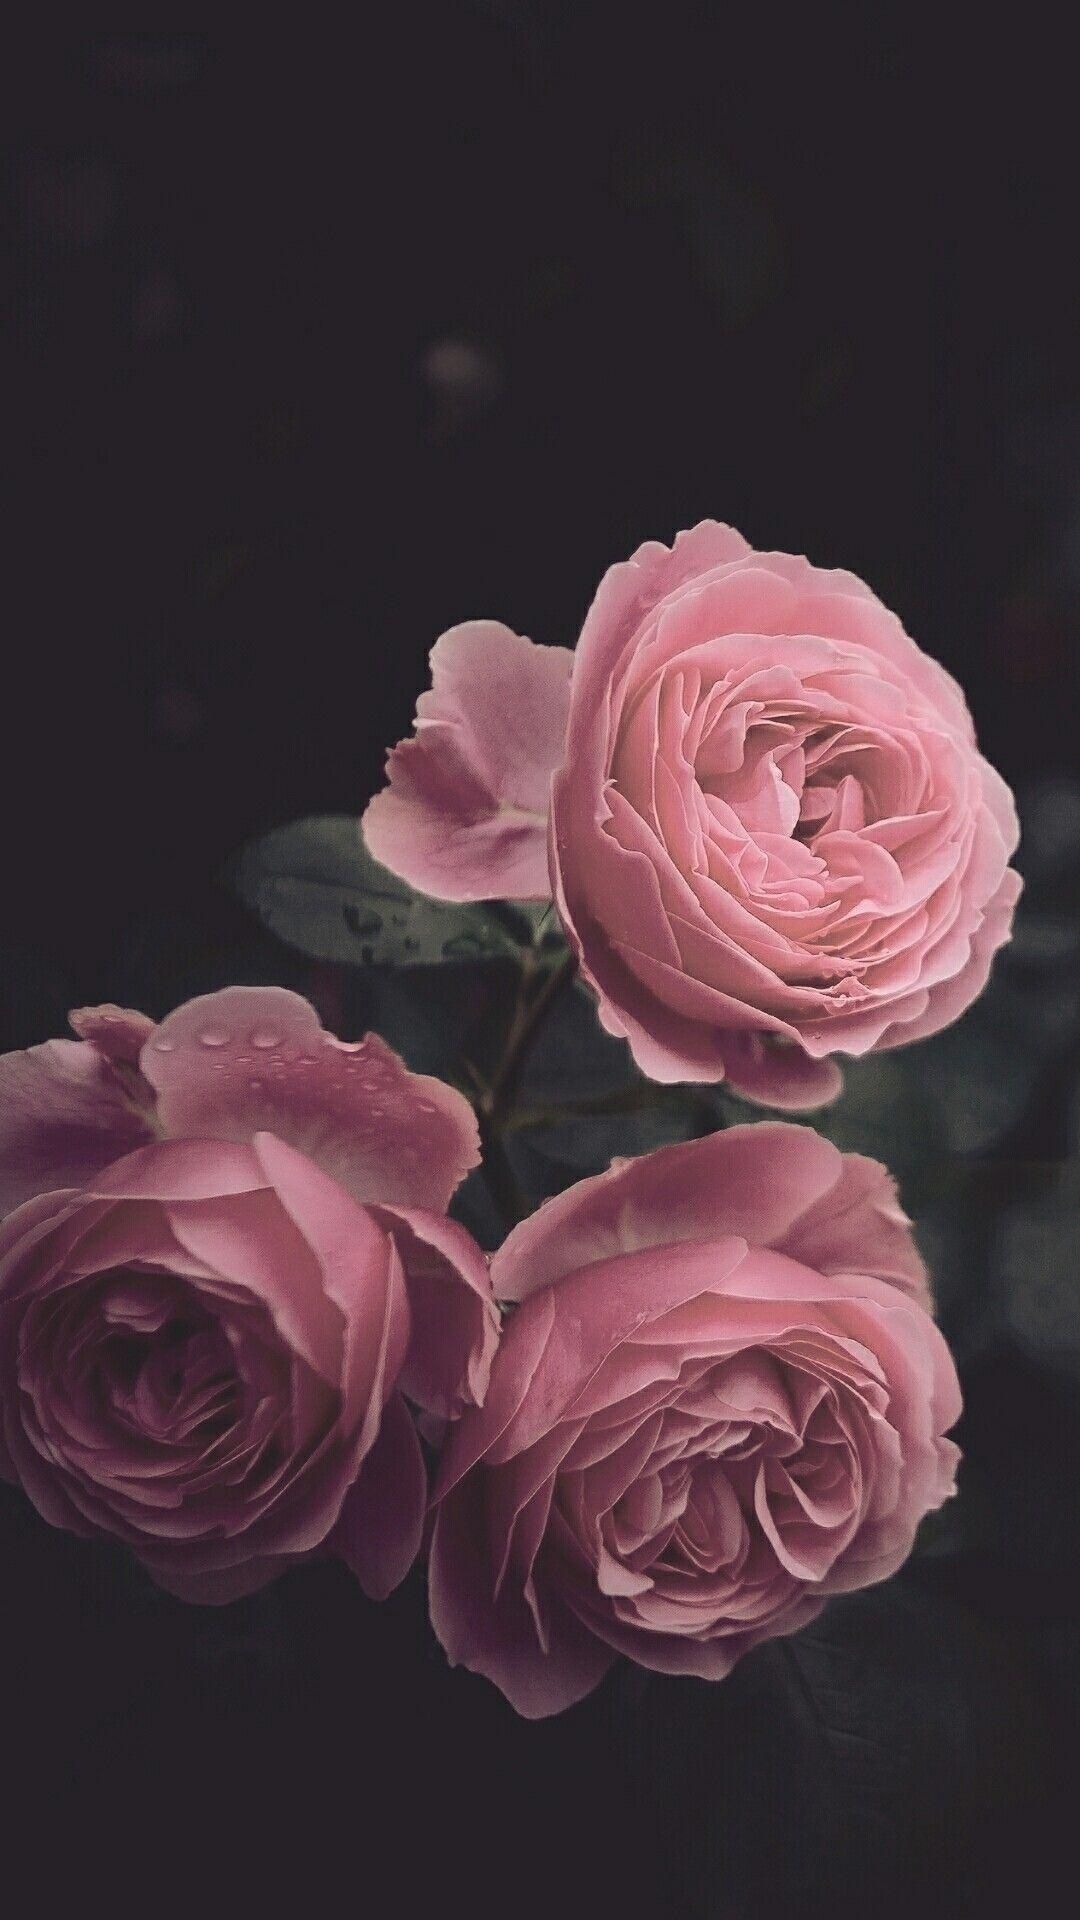  Rosen Hintergrundbild 1080x1920. Rose Aesthetic. Pink Wallpaper Download